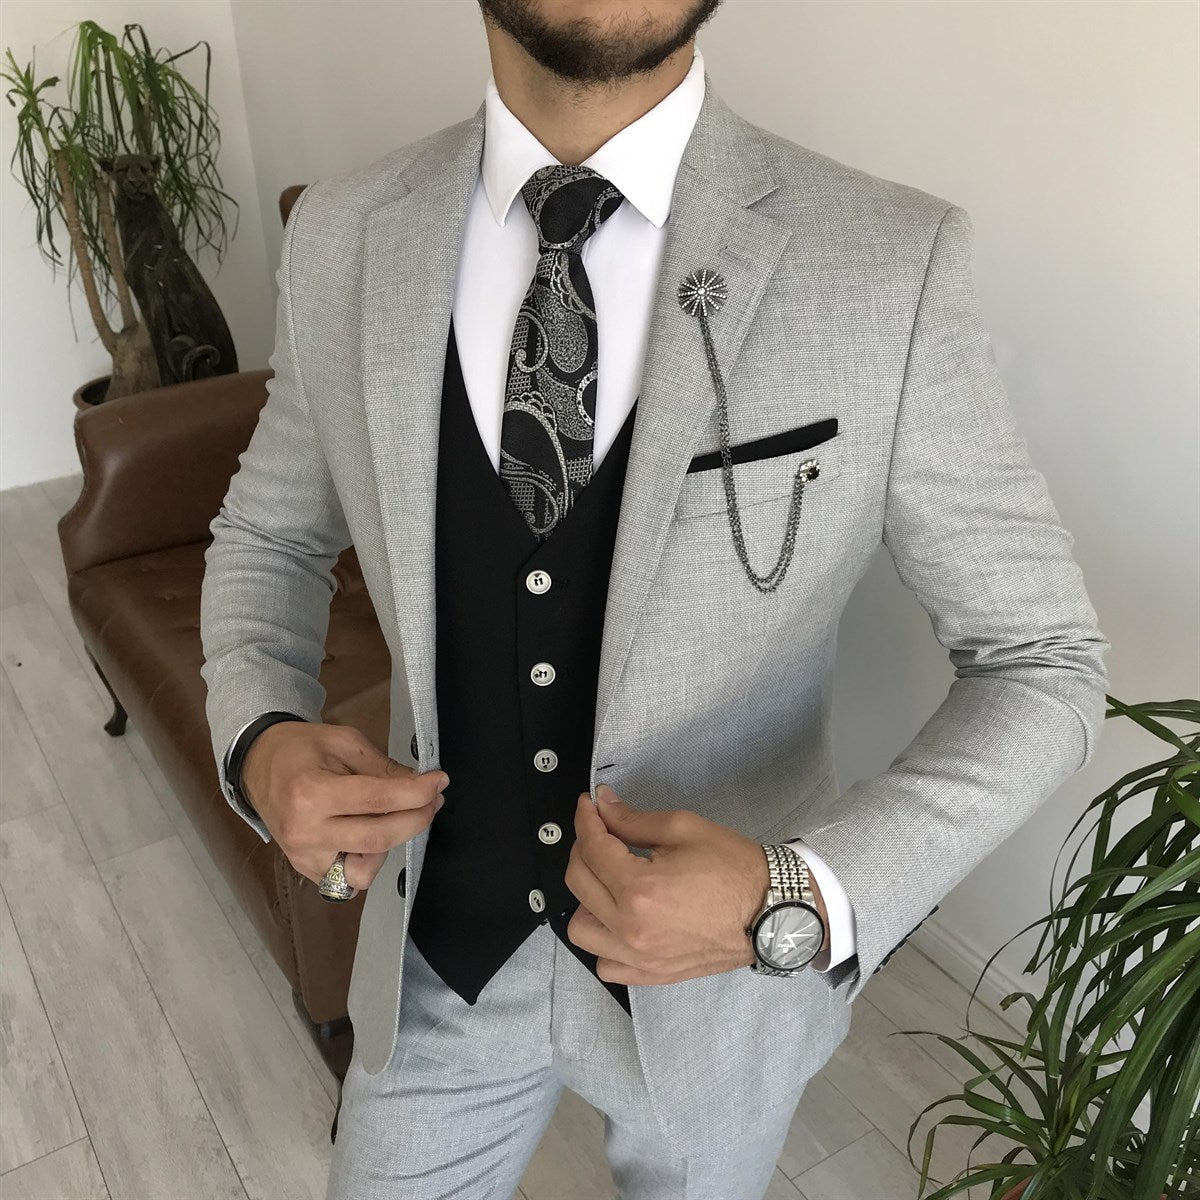 Bojoni Cagliari Grey Slim-Fit Suit 3-Piece